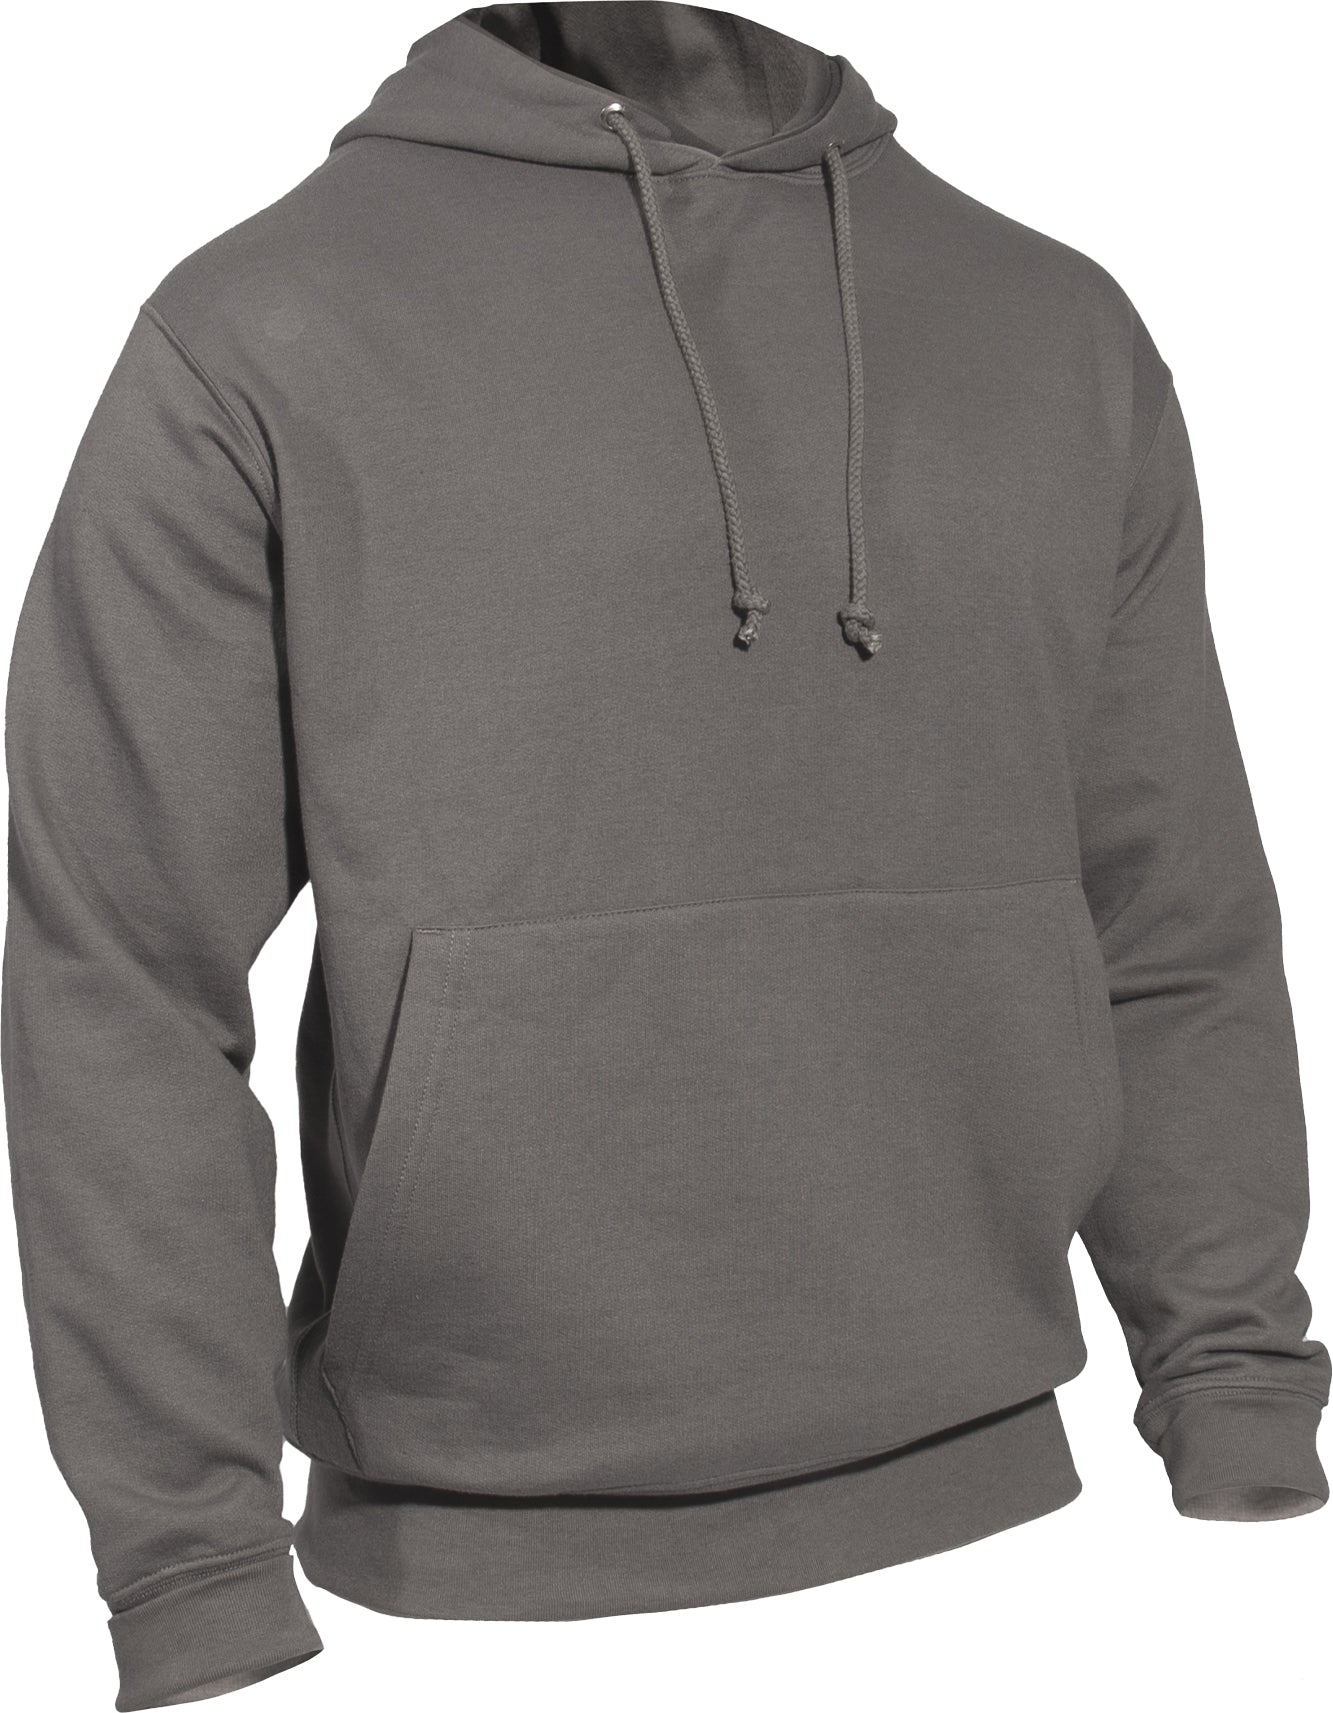 Gunmetal Grey Every Day Pullover Hooded Sweatshirt